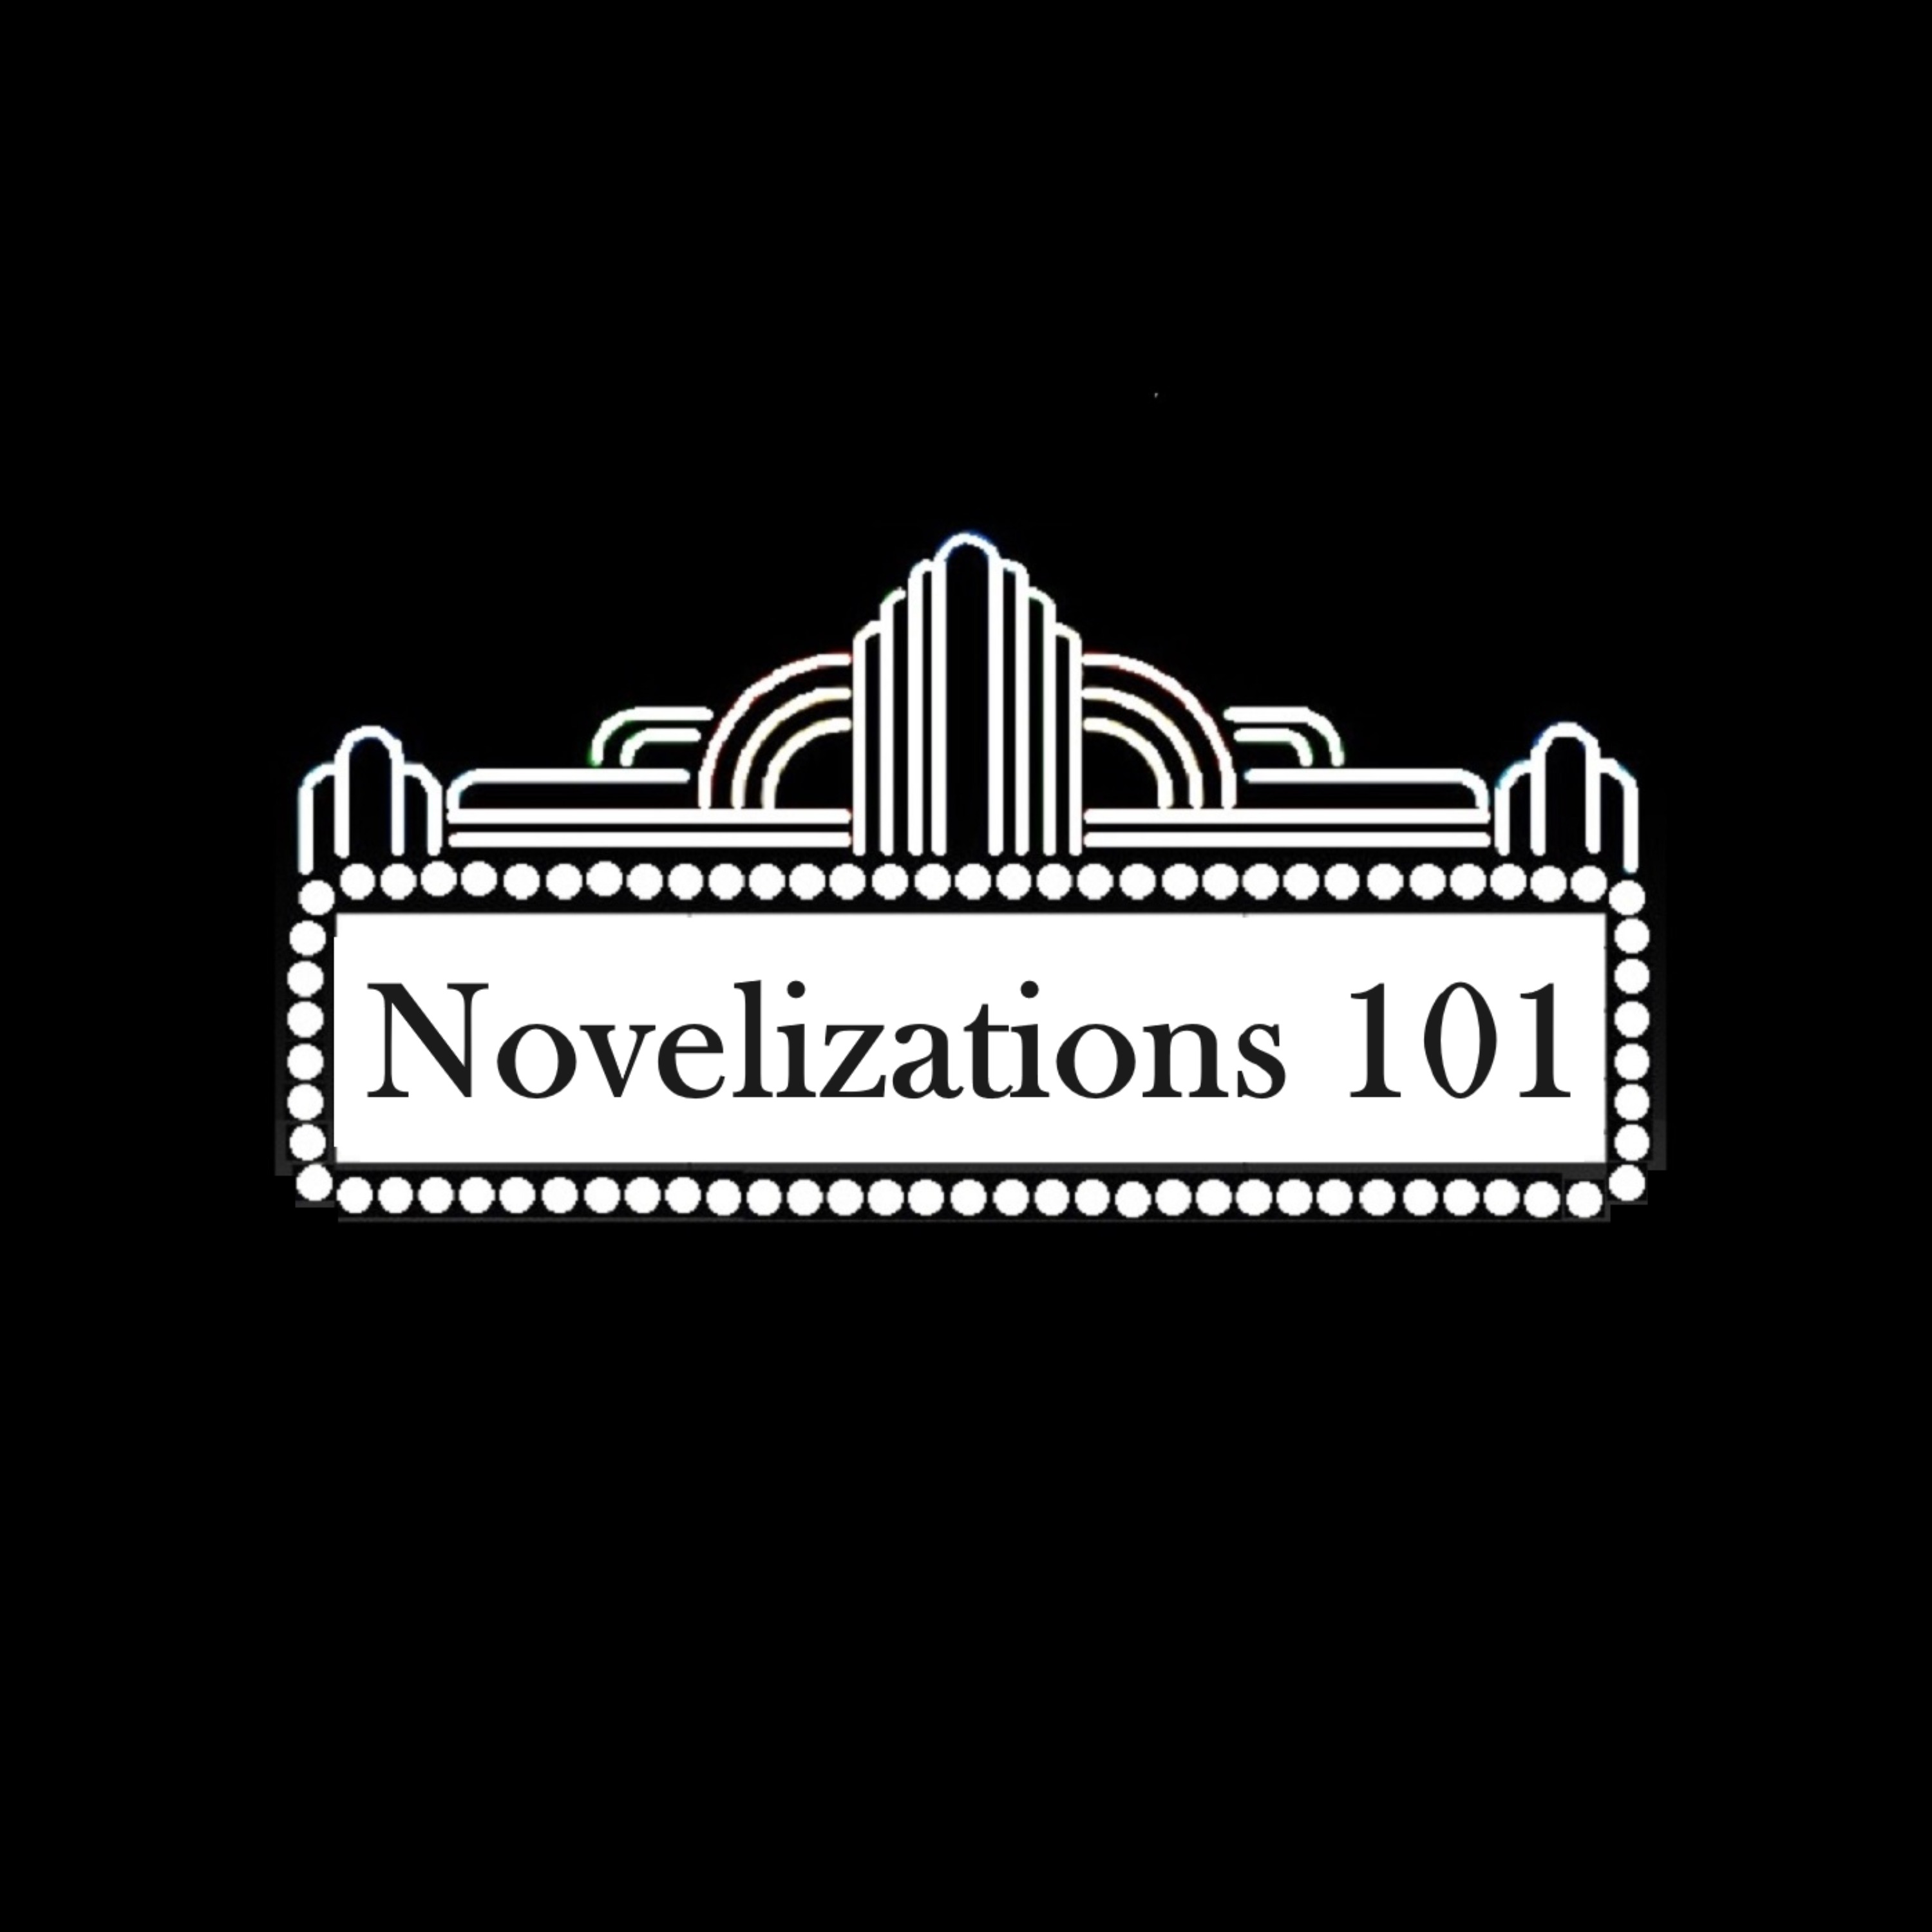 Novelizations 101